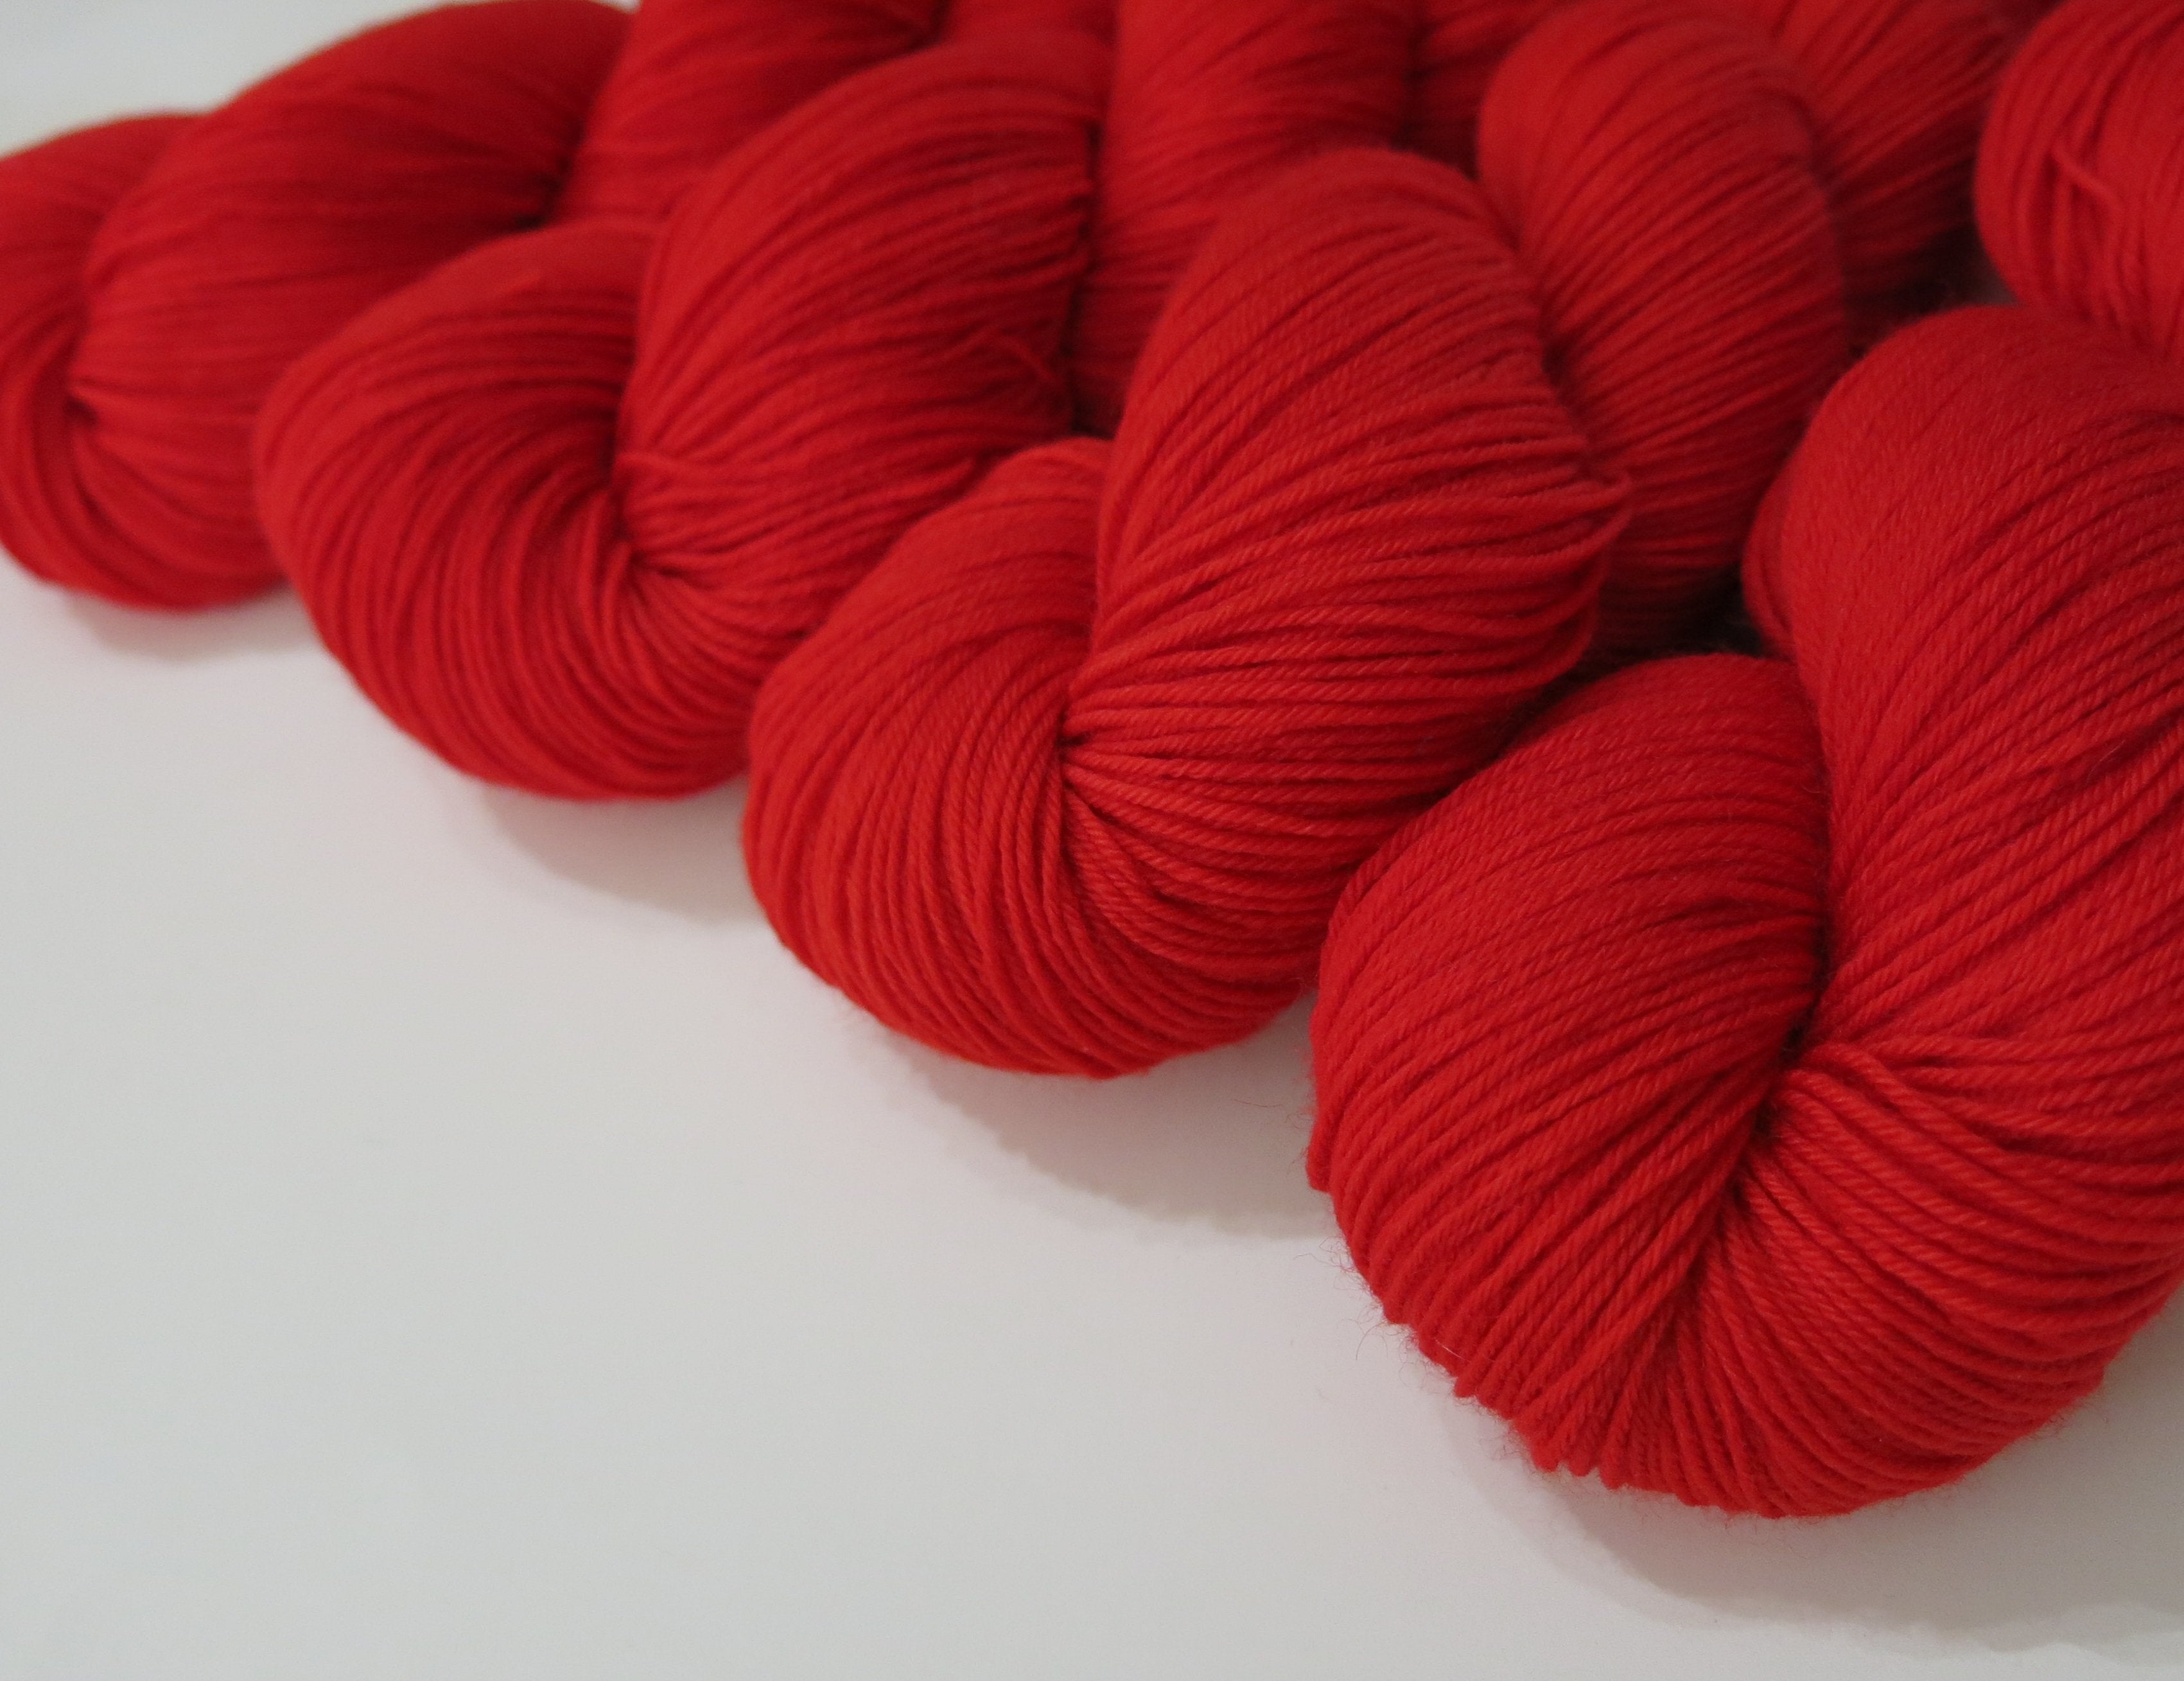 magic ribbon hand dyed solid red superwash merino sock yarn skeins